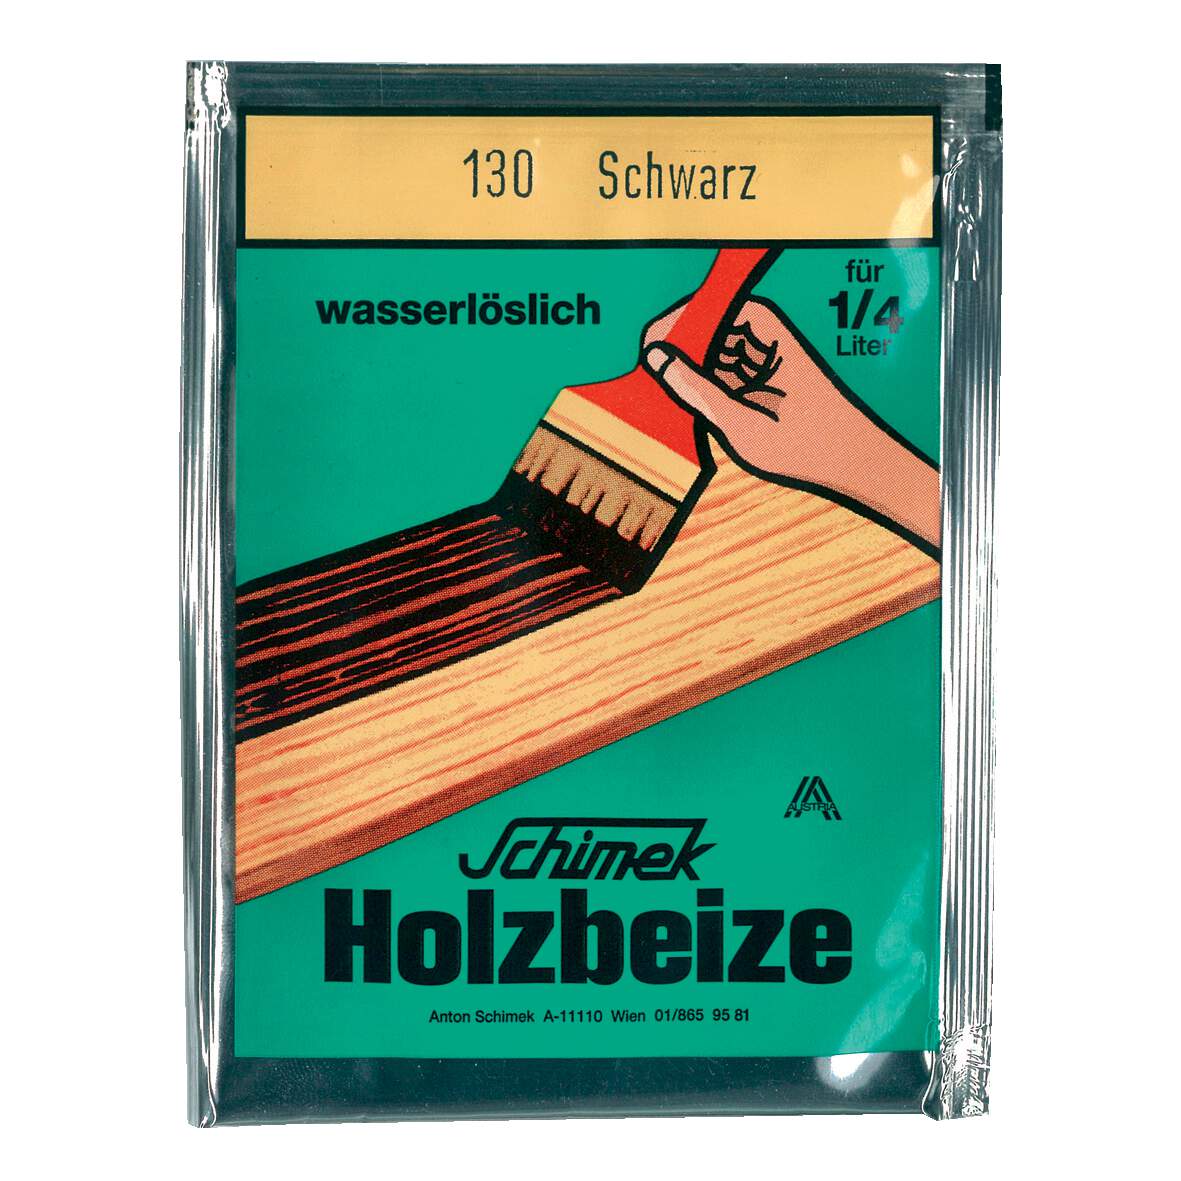 1216627 - Holzbeize Mahagonibraun Nr.107 wasserlöslich